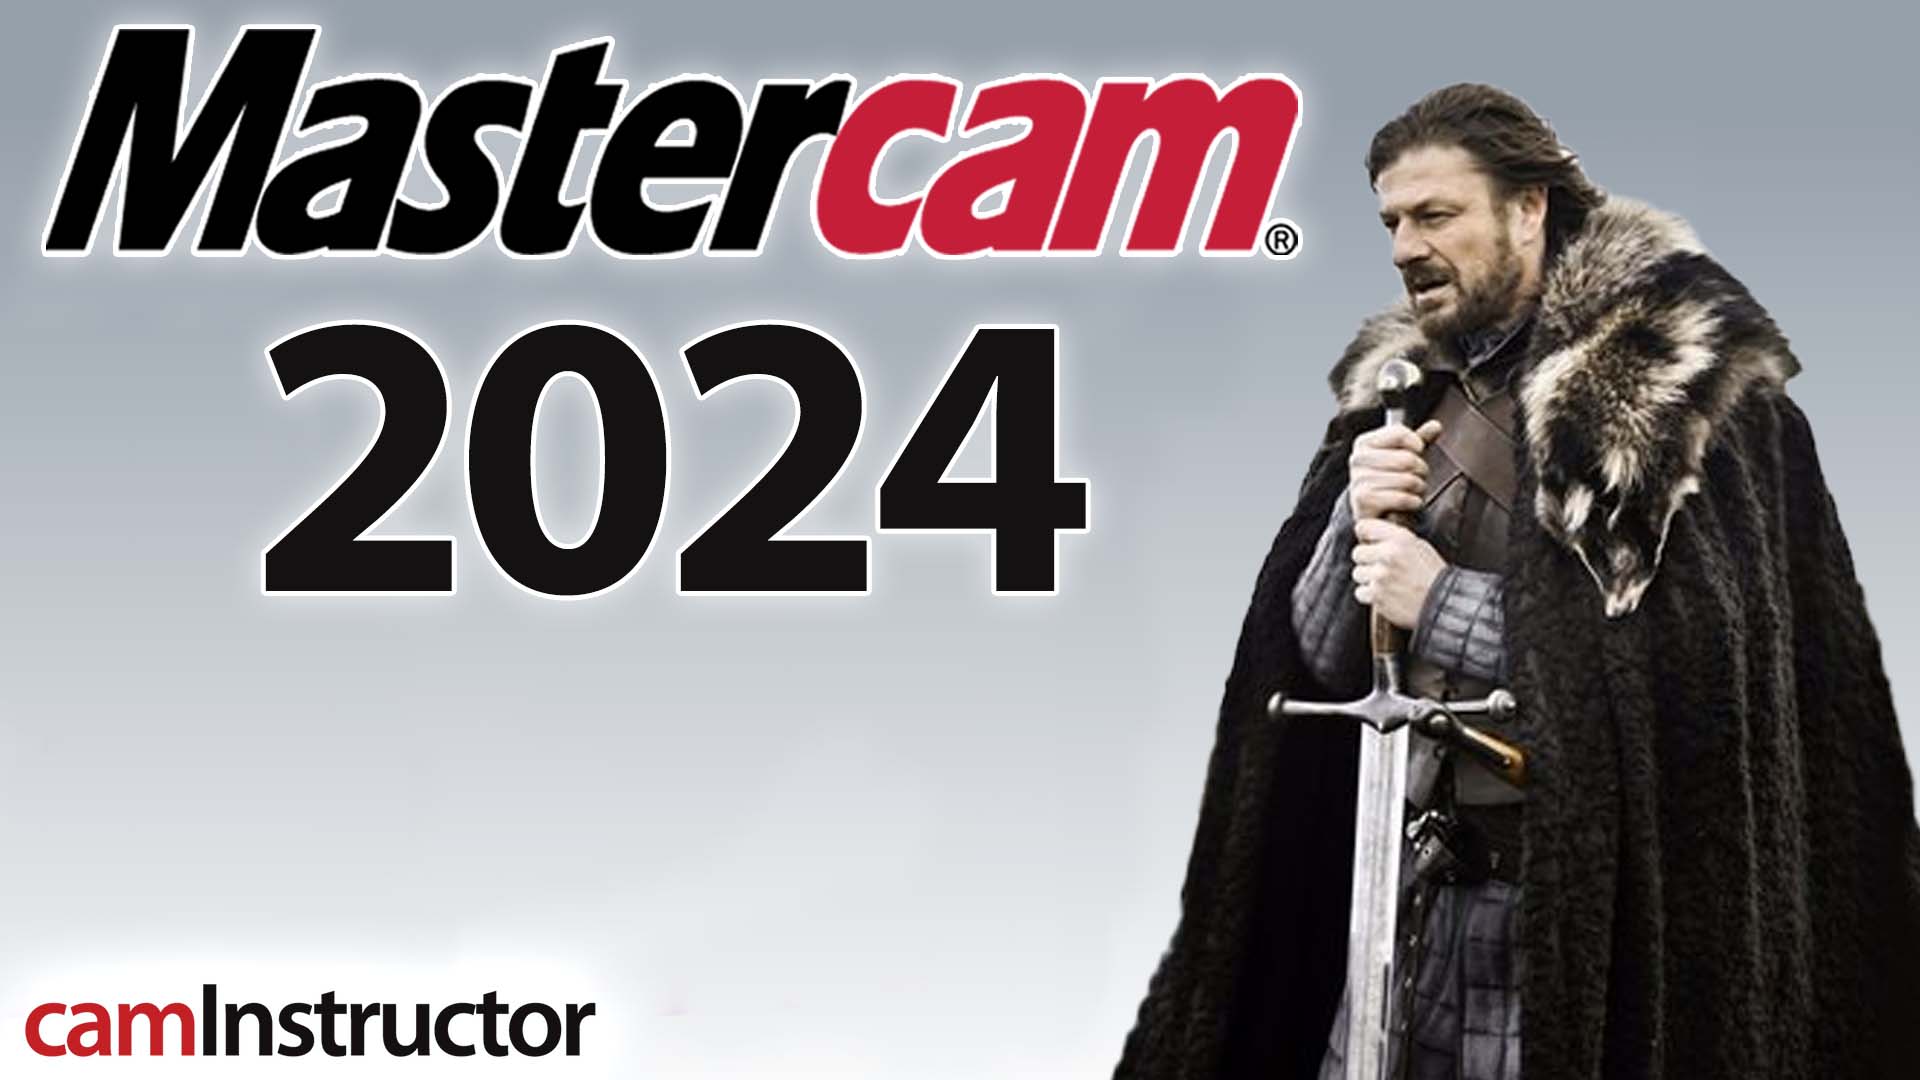 Brace Yourself, Mastercam 2024 is Coming